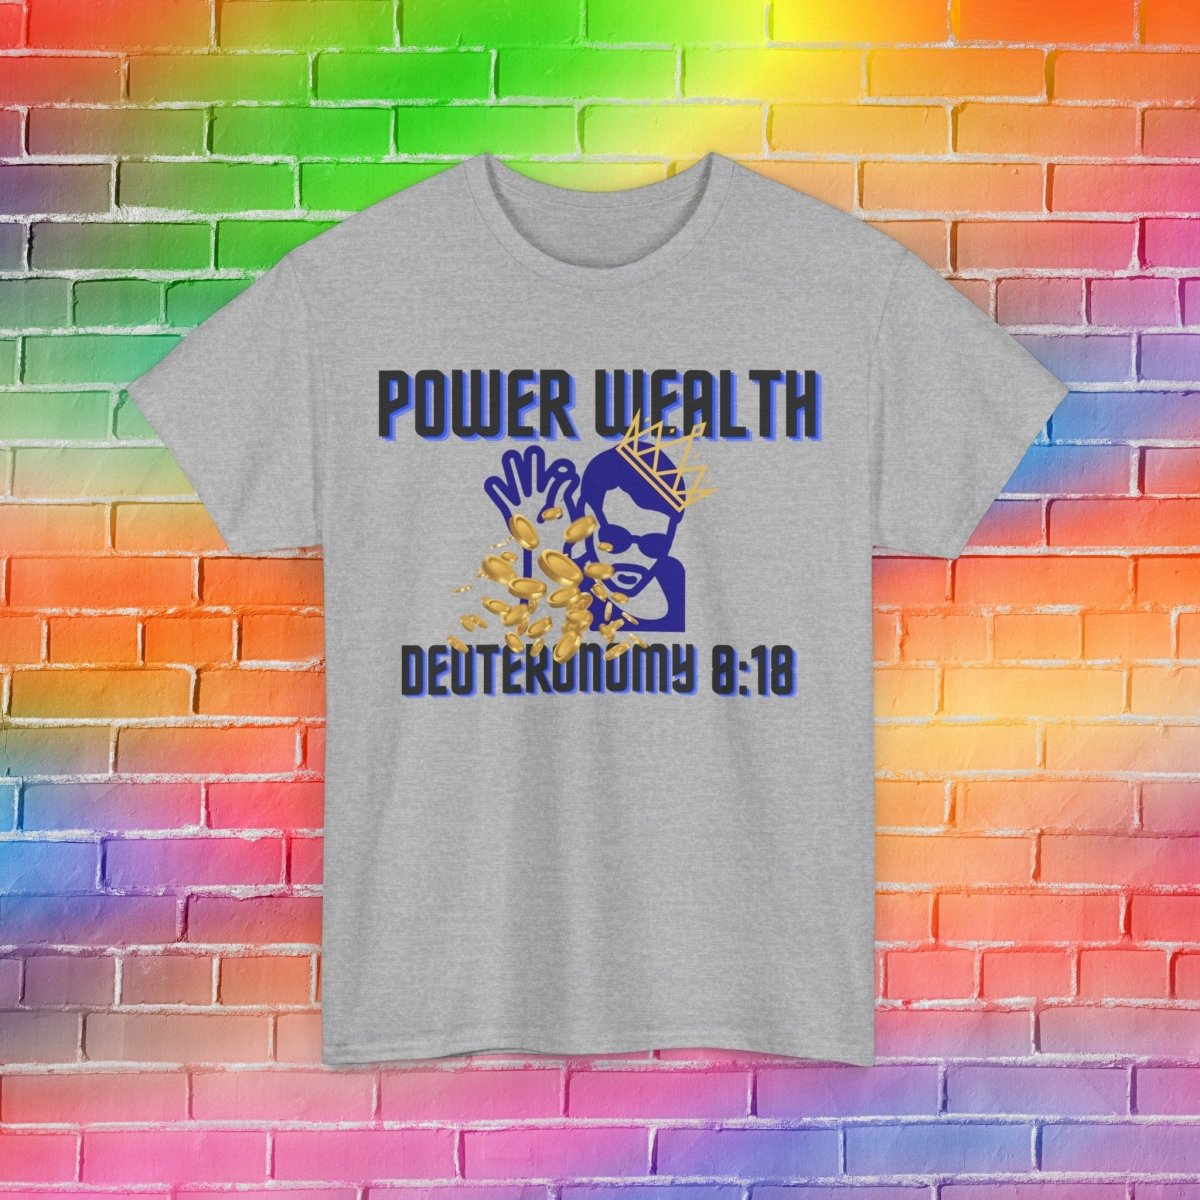 "Power to Get Wealth" Collection: Deuteronomy 8:18 Men's Heavy Cotton T-Shirts - Plain Vision Brand